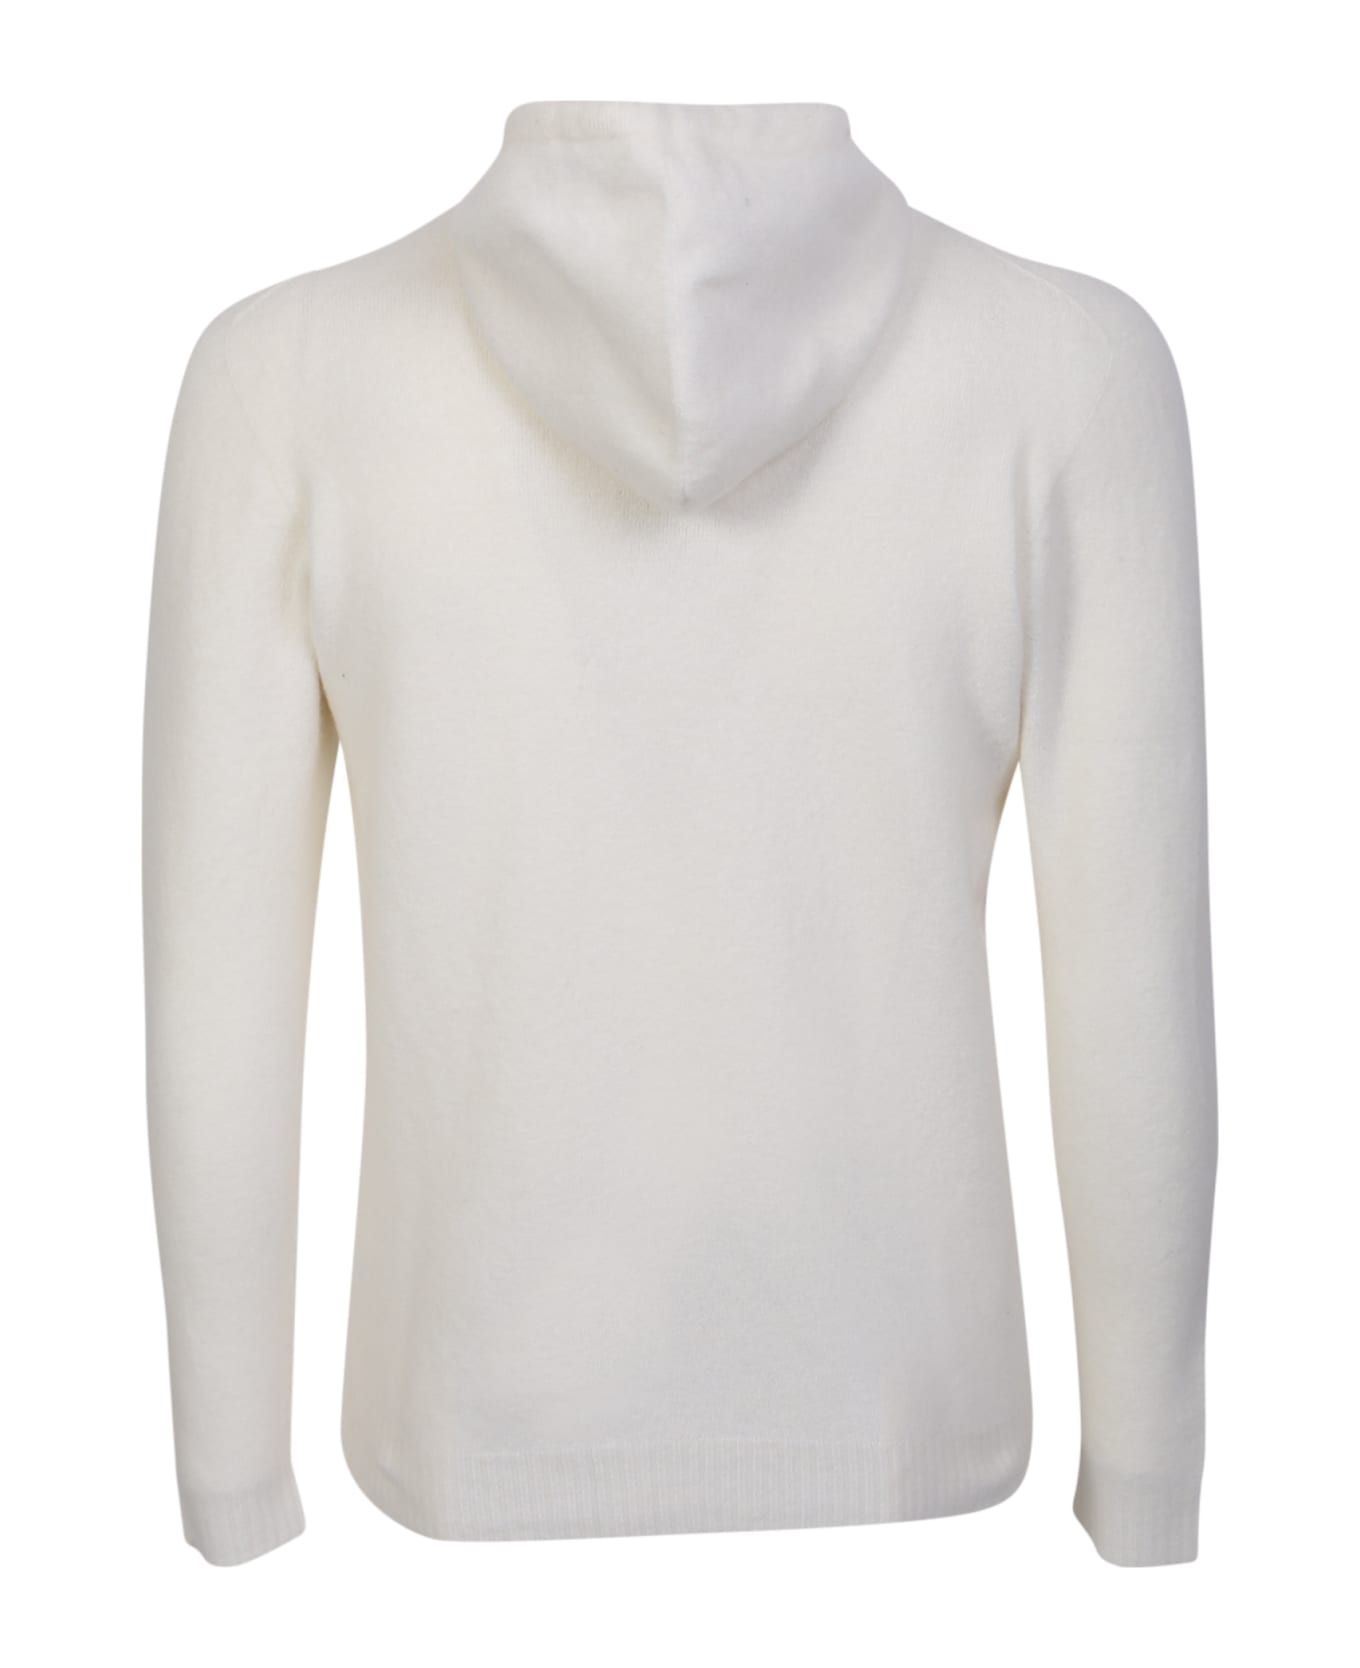 Original Vintage Style Original Vintage White Hoodie Sweatshirt - White